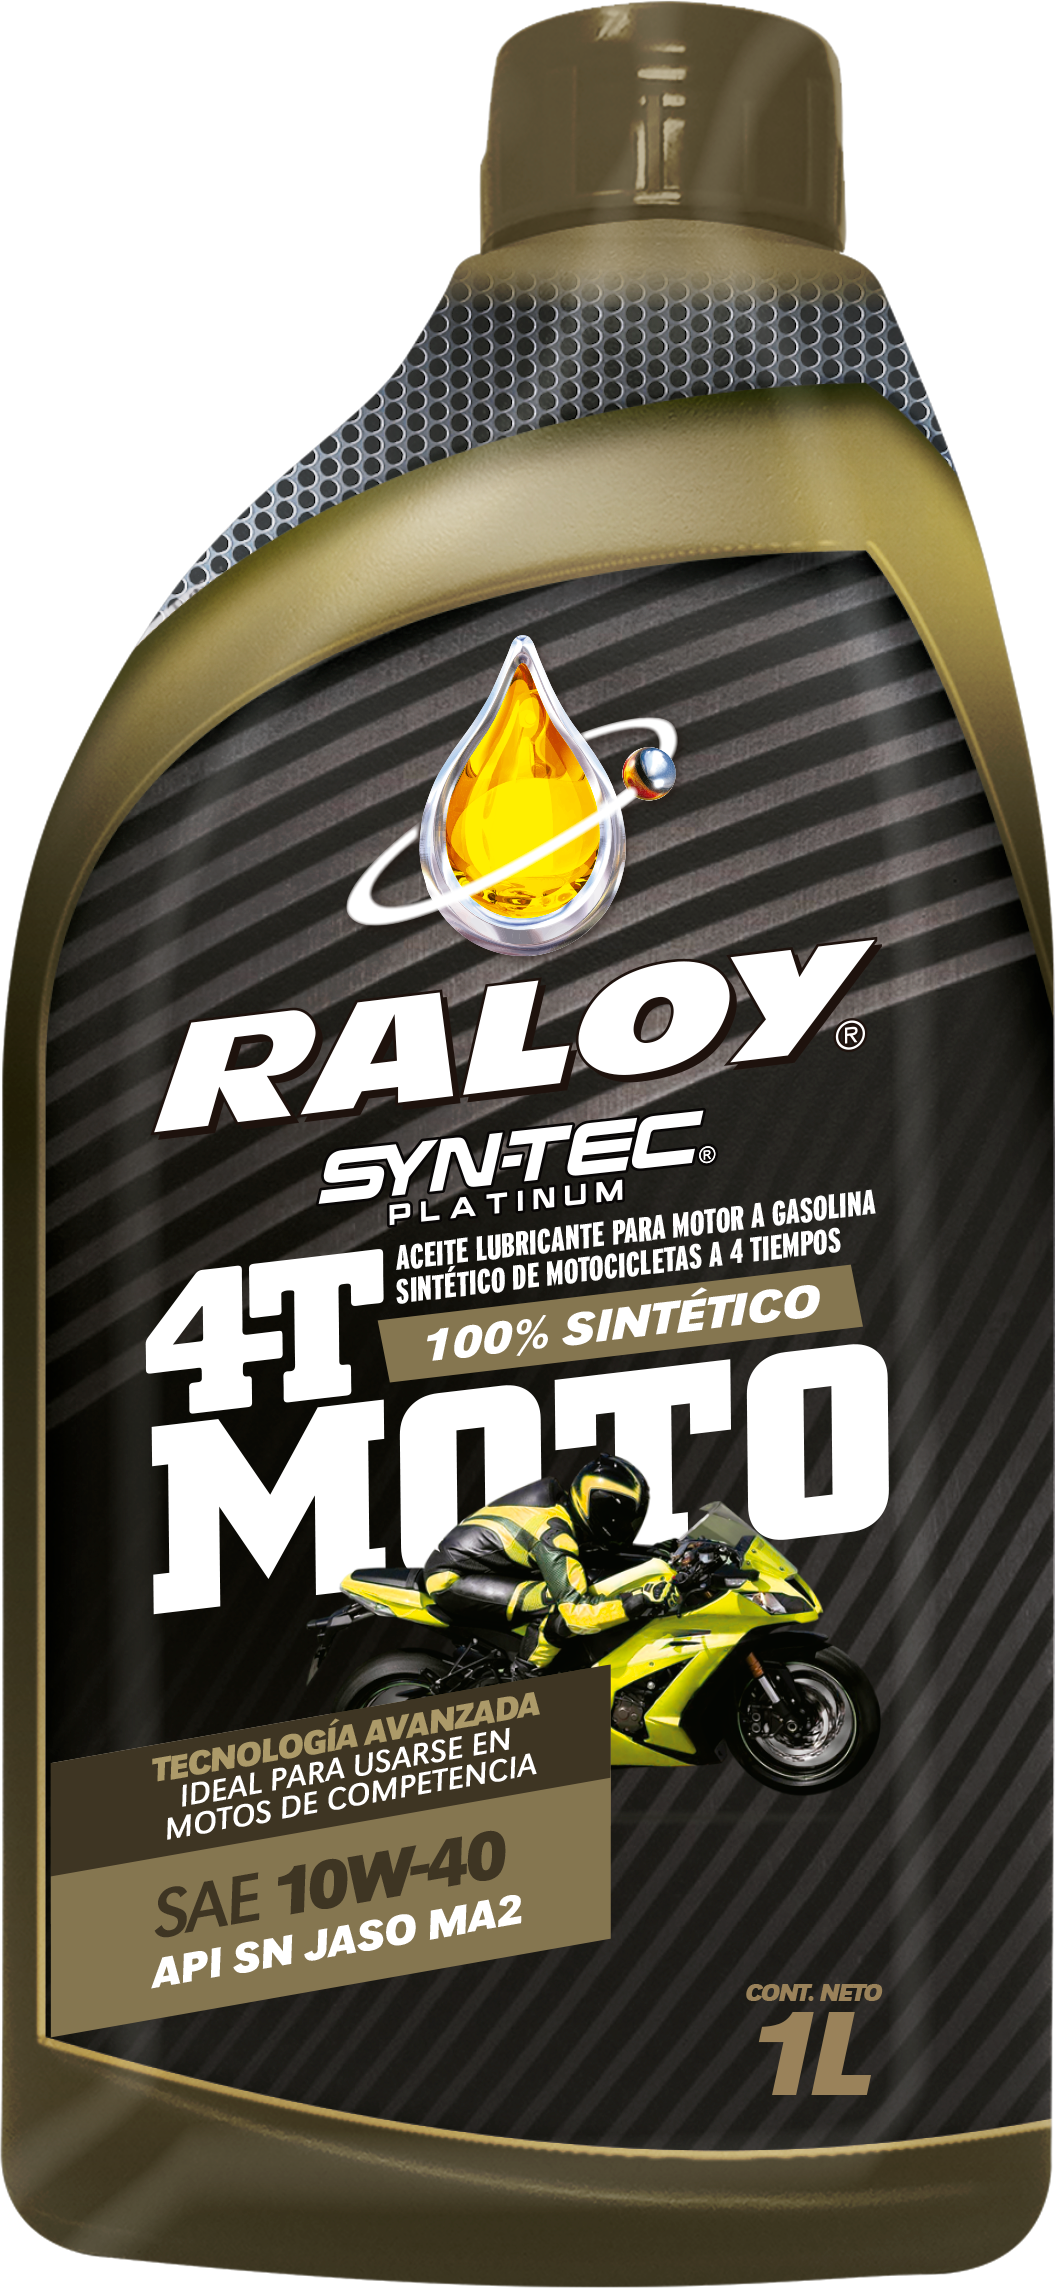 Raloy Syn-Tec Platinum Moto 4T Sae 10W-40